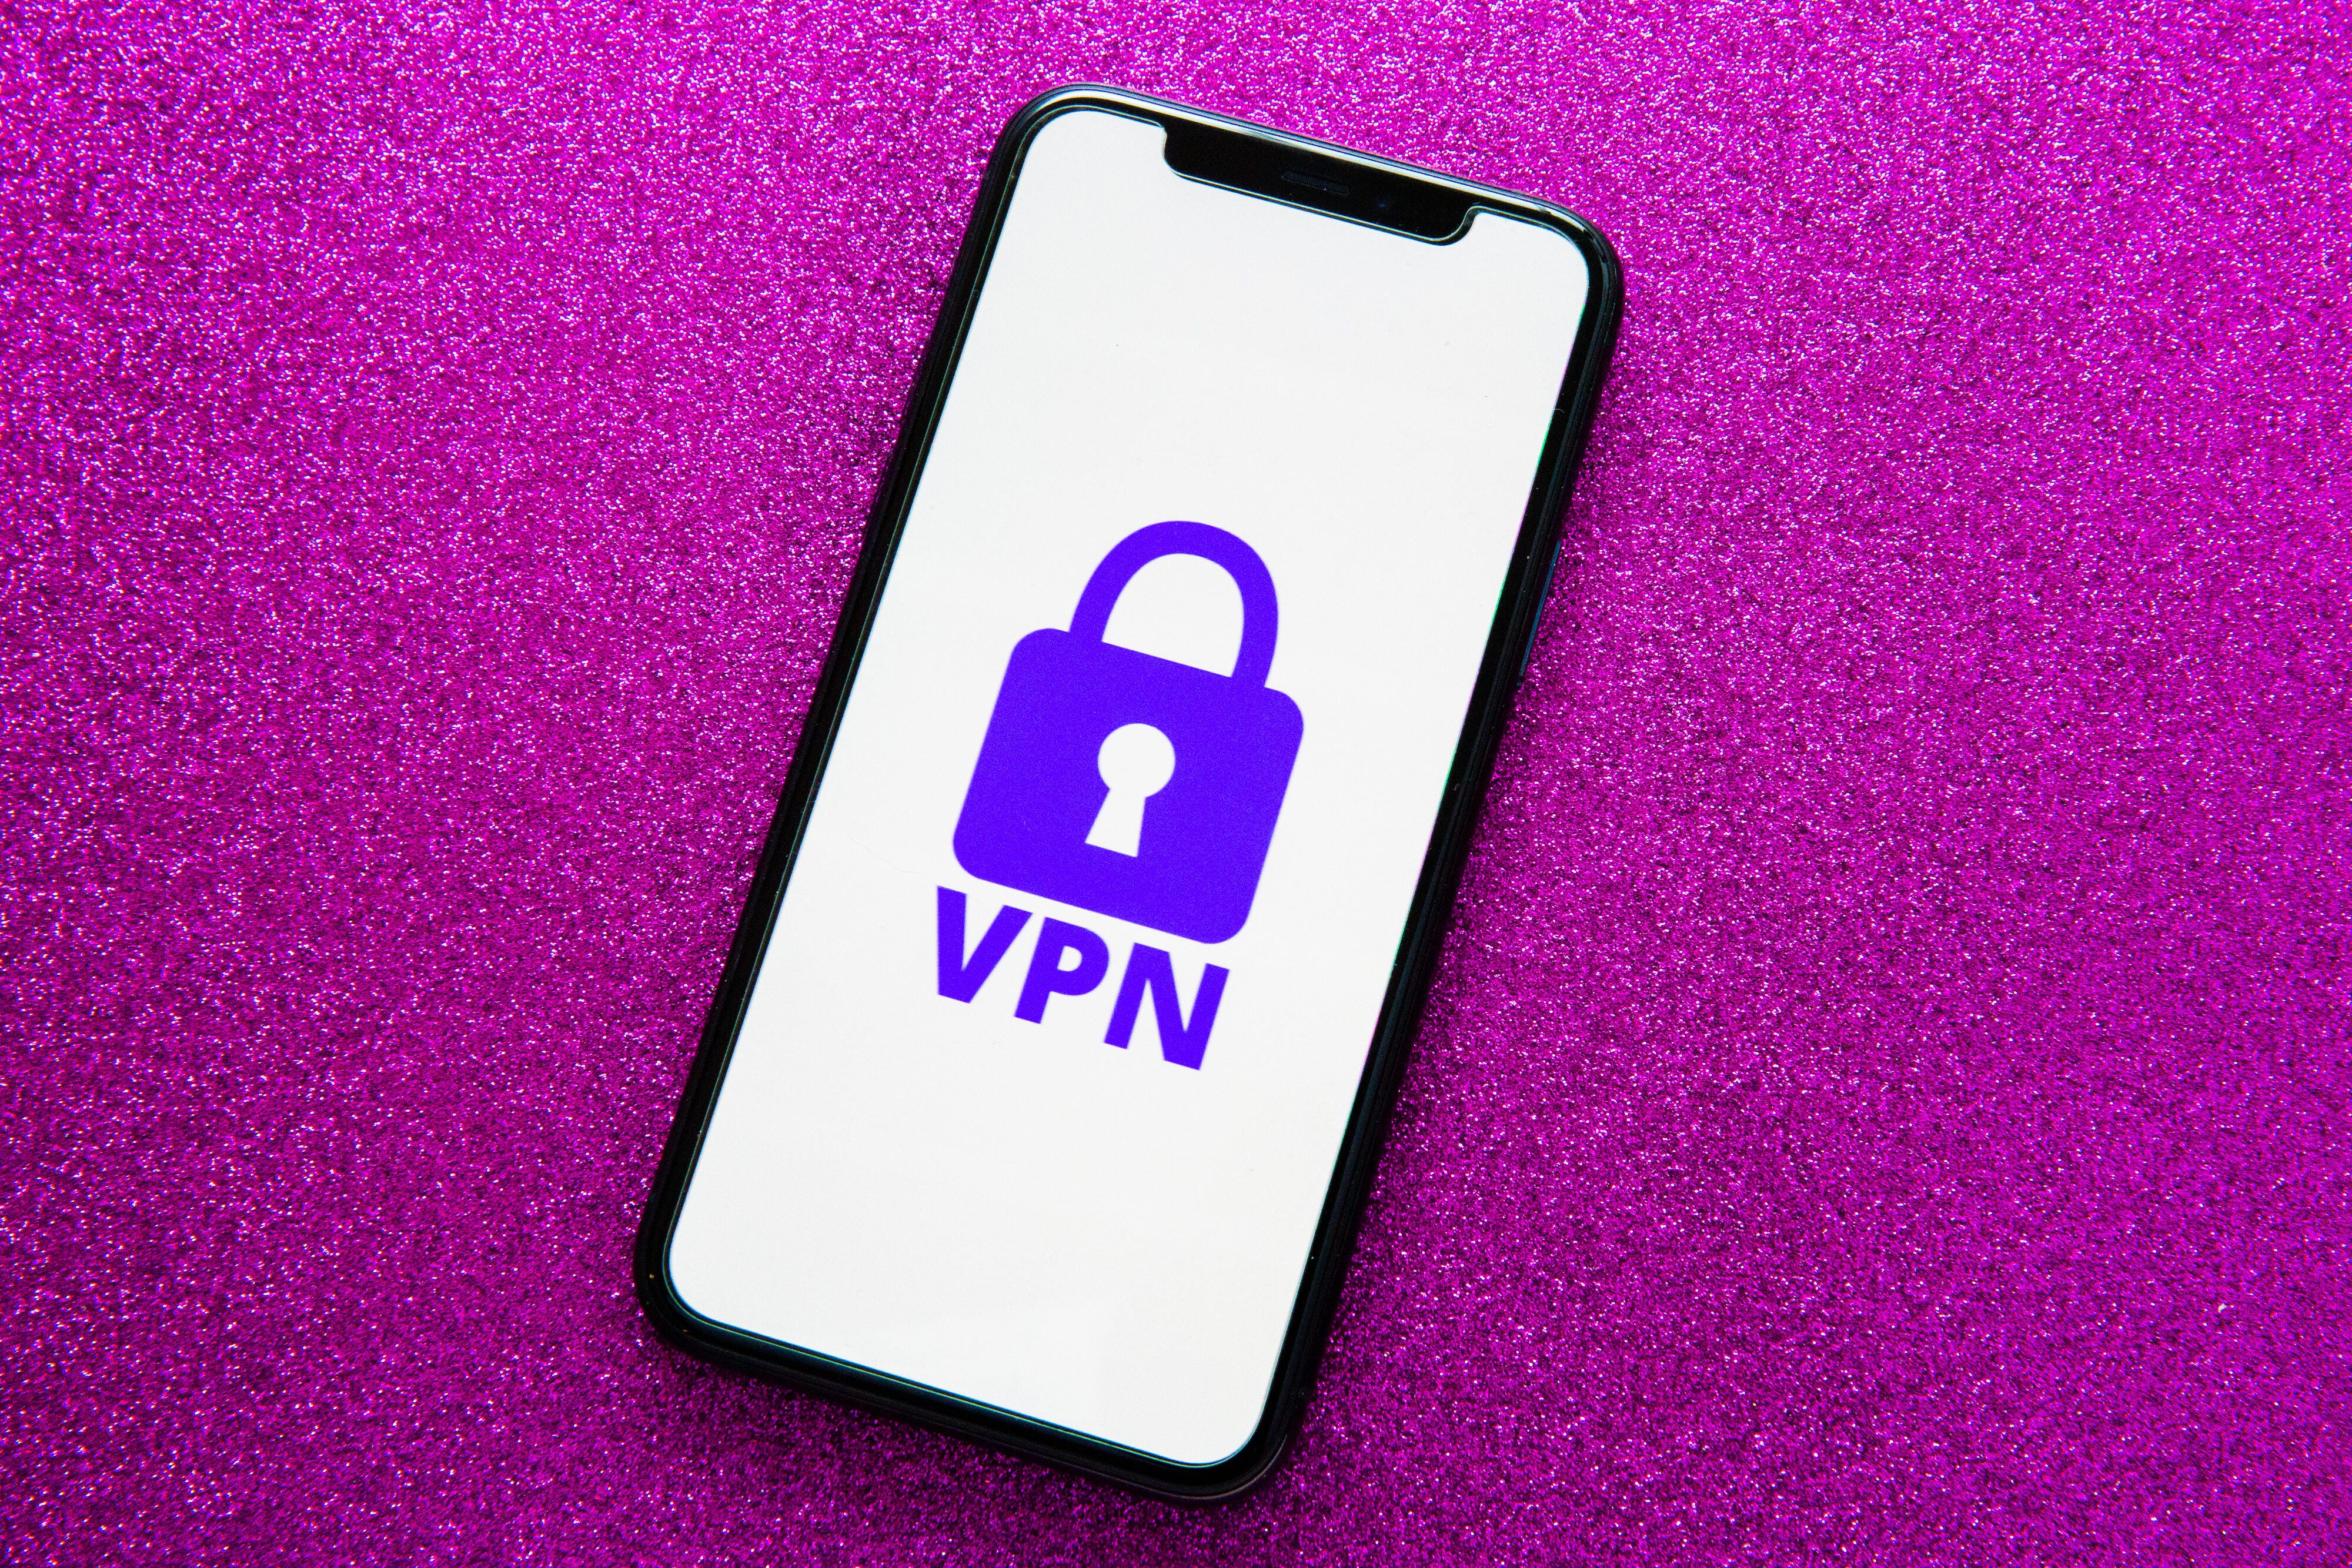 009-vpn-generic-logo-on-phone-security-2021